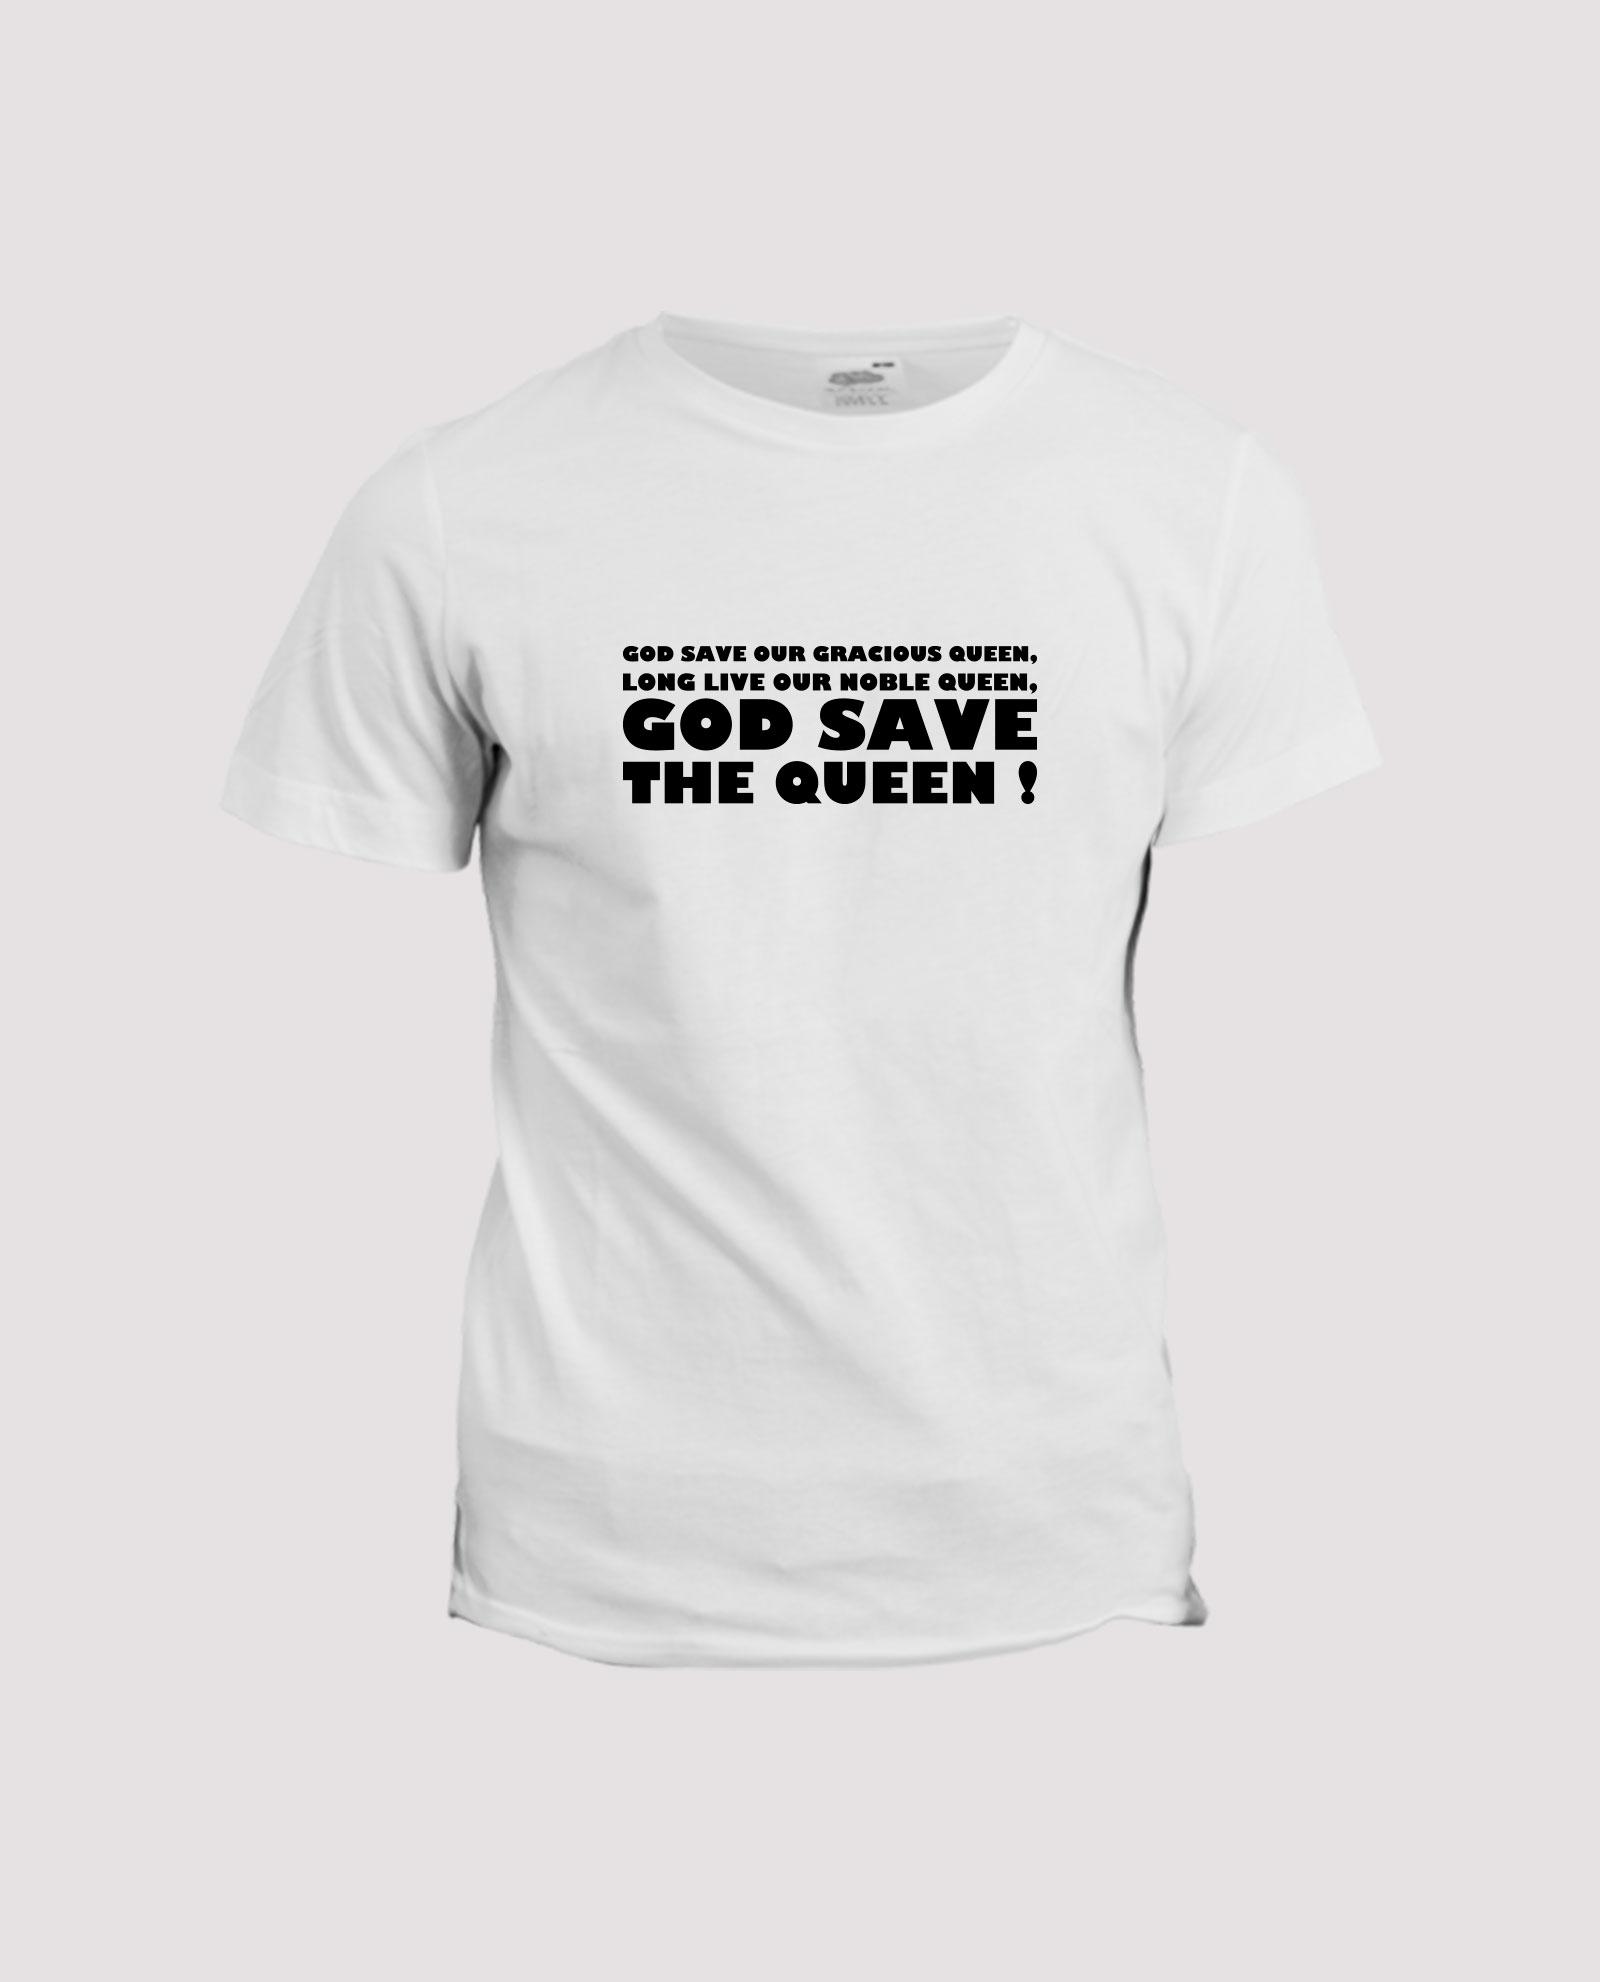 la-ligne-shop-t-shirt-hommage-god-save-the-queen-chant-supporter-royaume-uni-elizabeth-II-2-stade-wembley